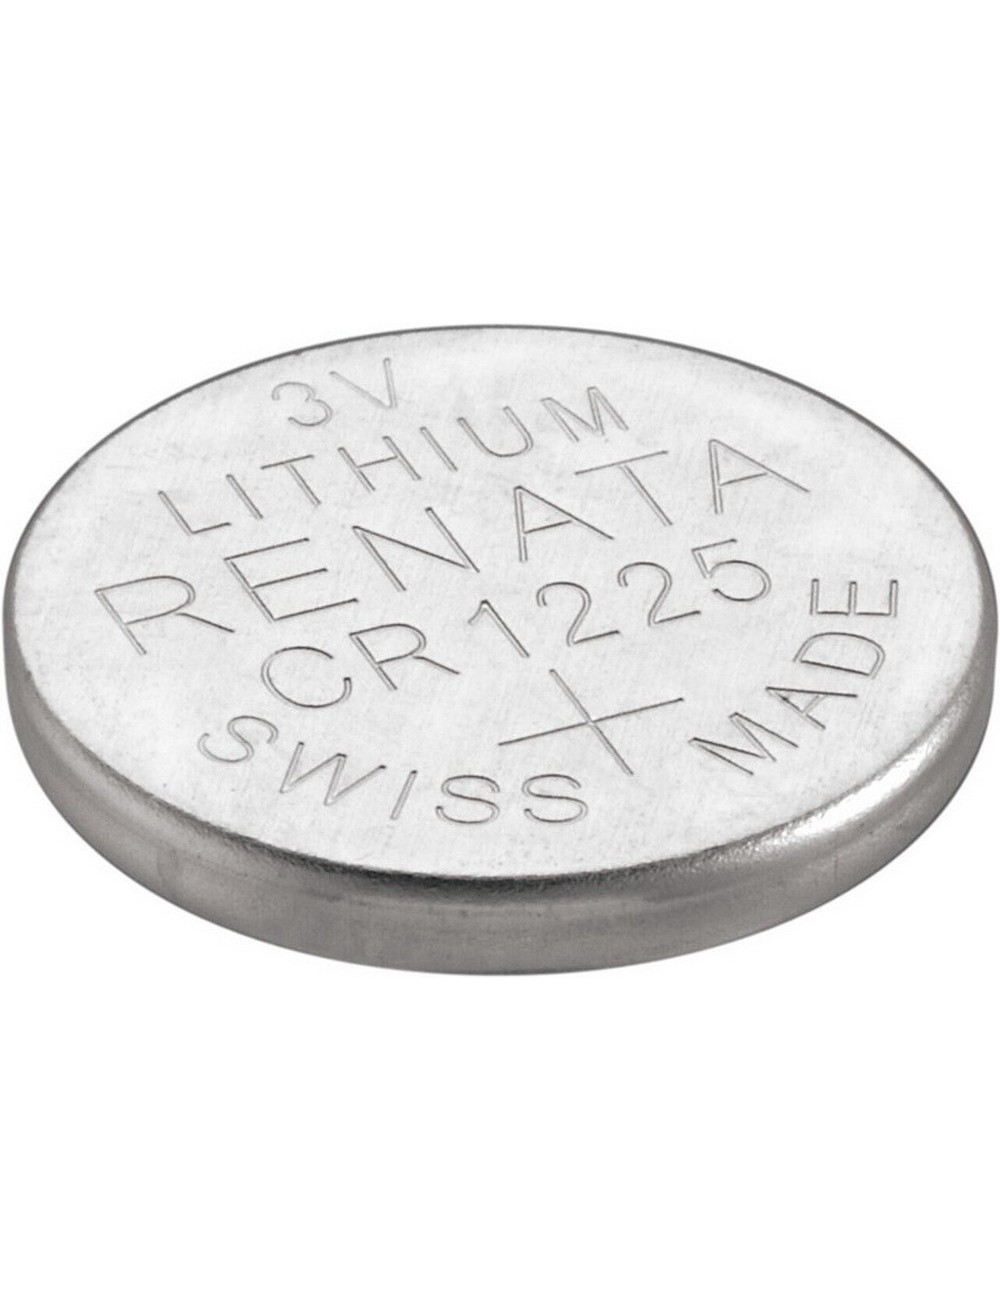 Lithium knoopcel CR1225 3V 48mAh (Renata)